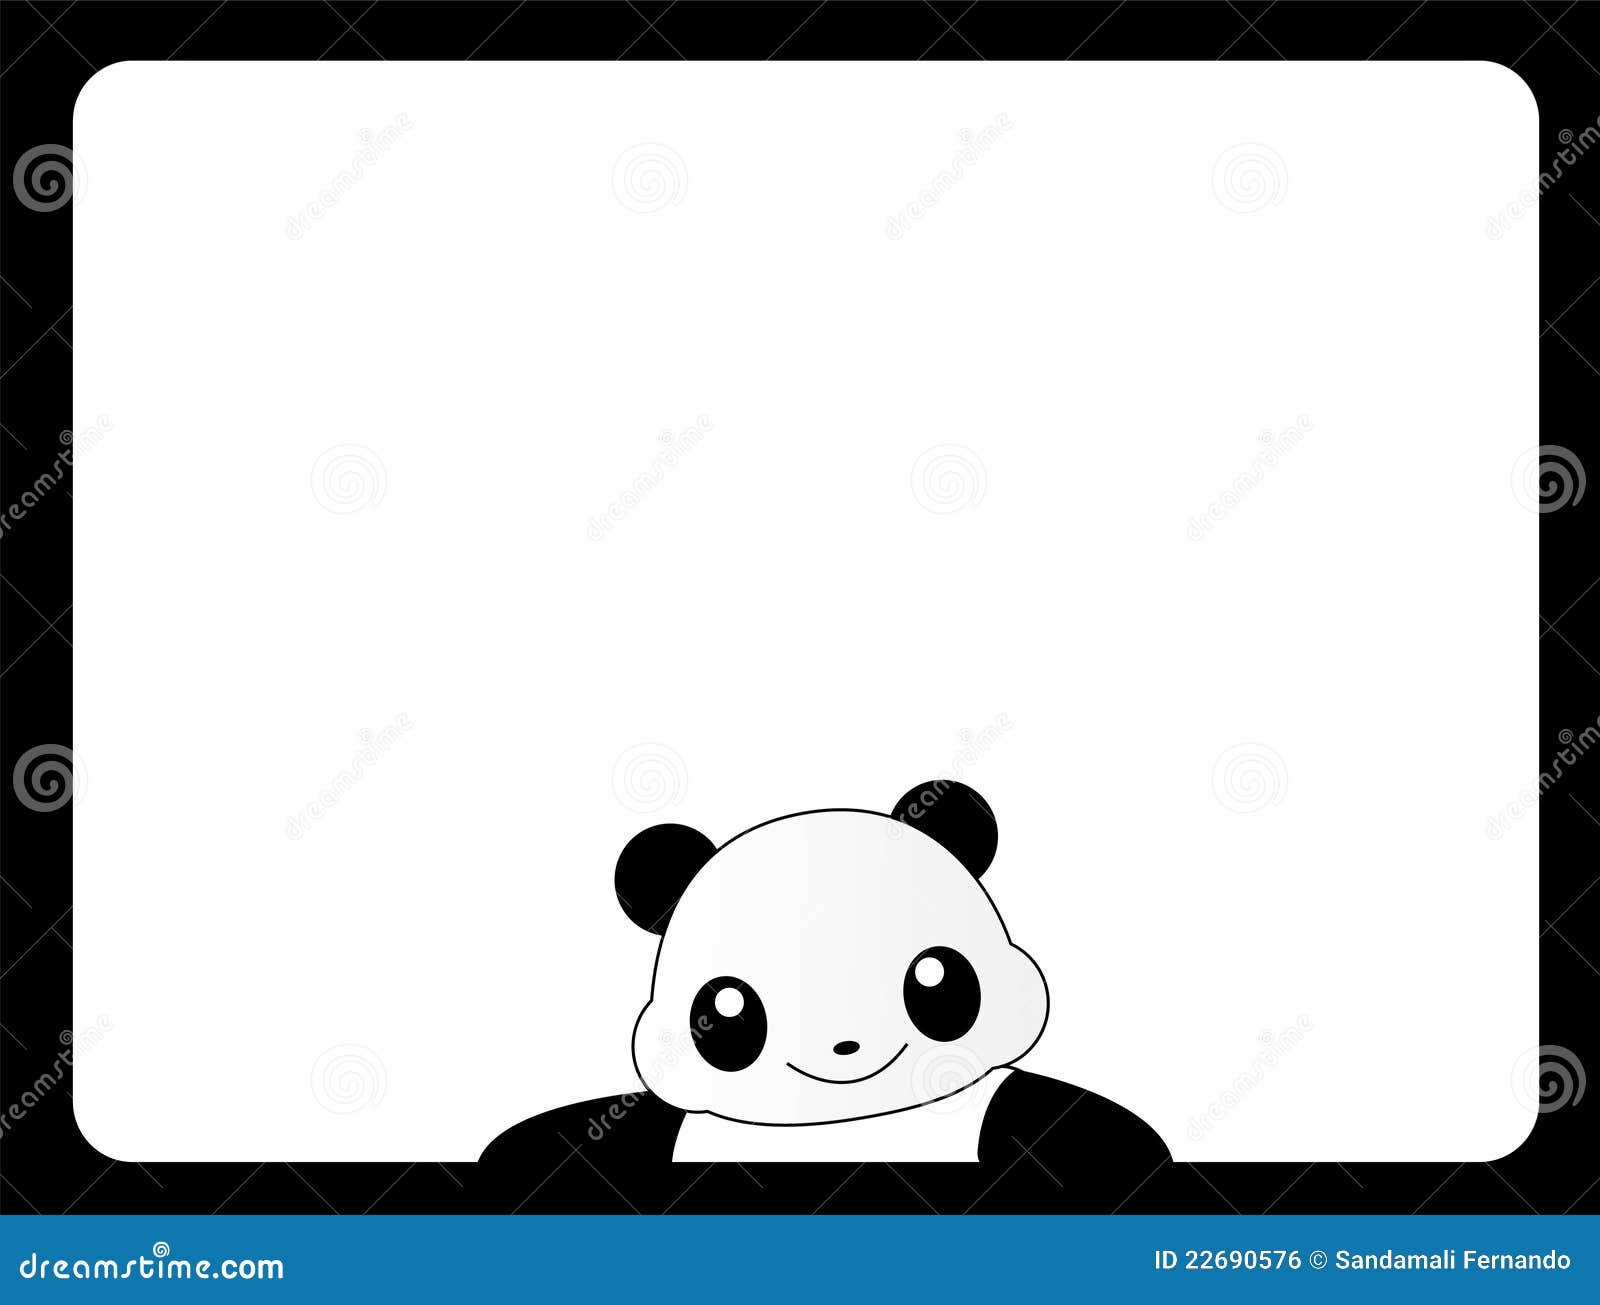 clipart panda frame - photo #18